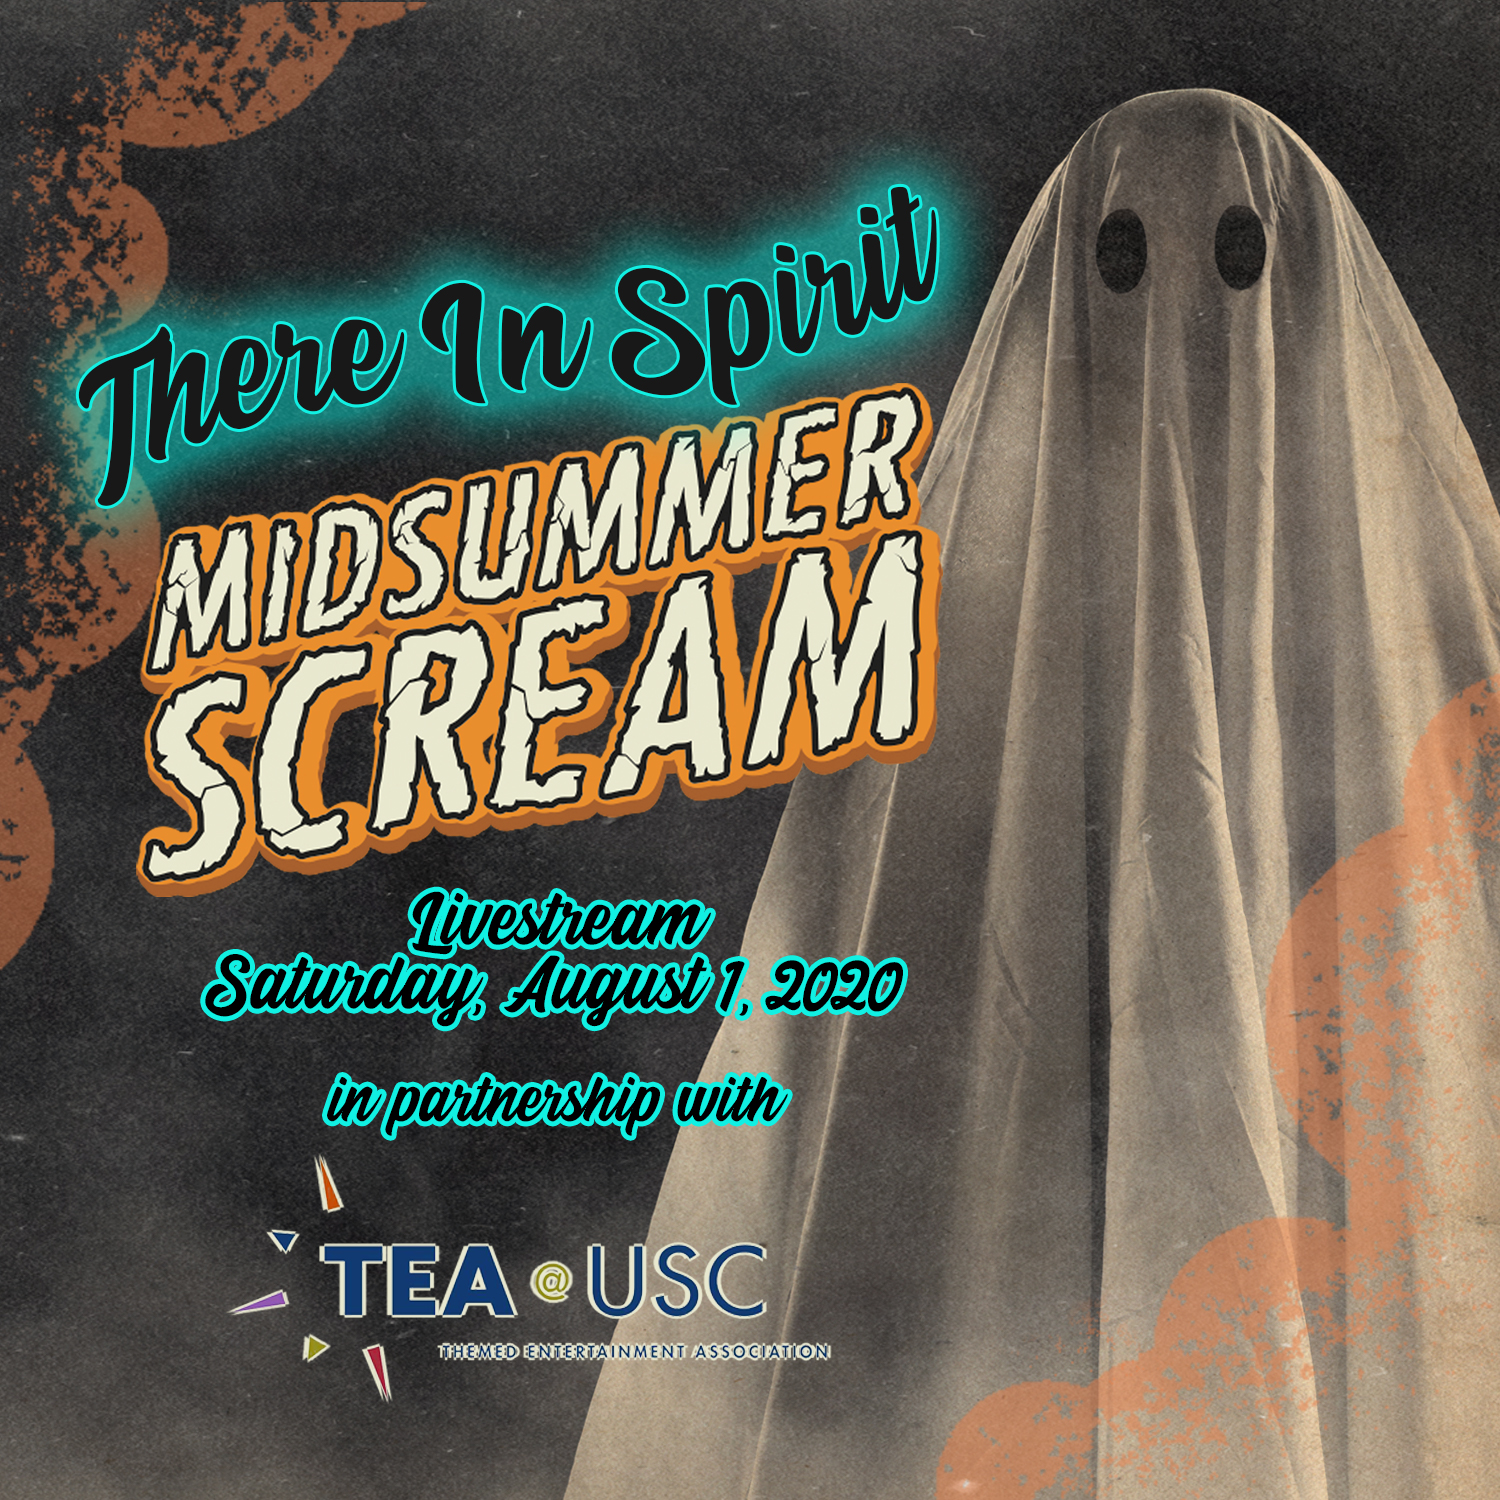 AUG 1 Midsummer Scream Livestream SpookyInc